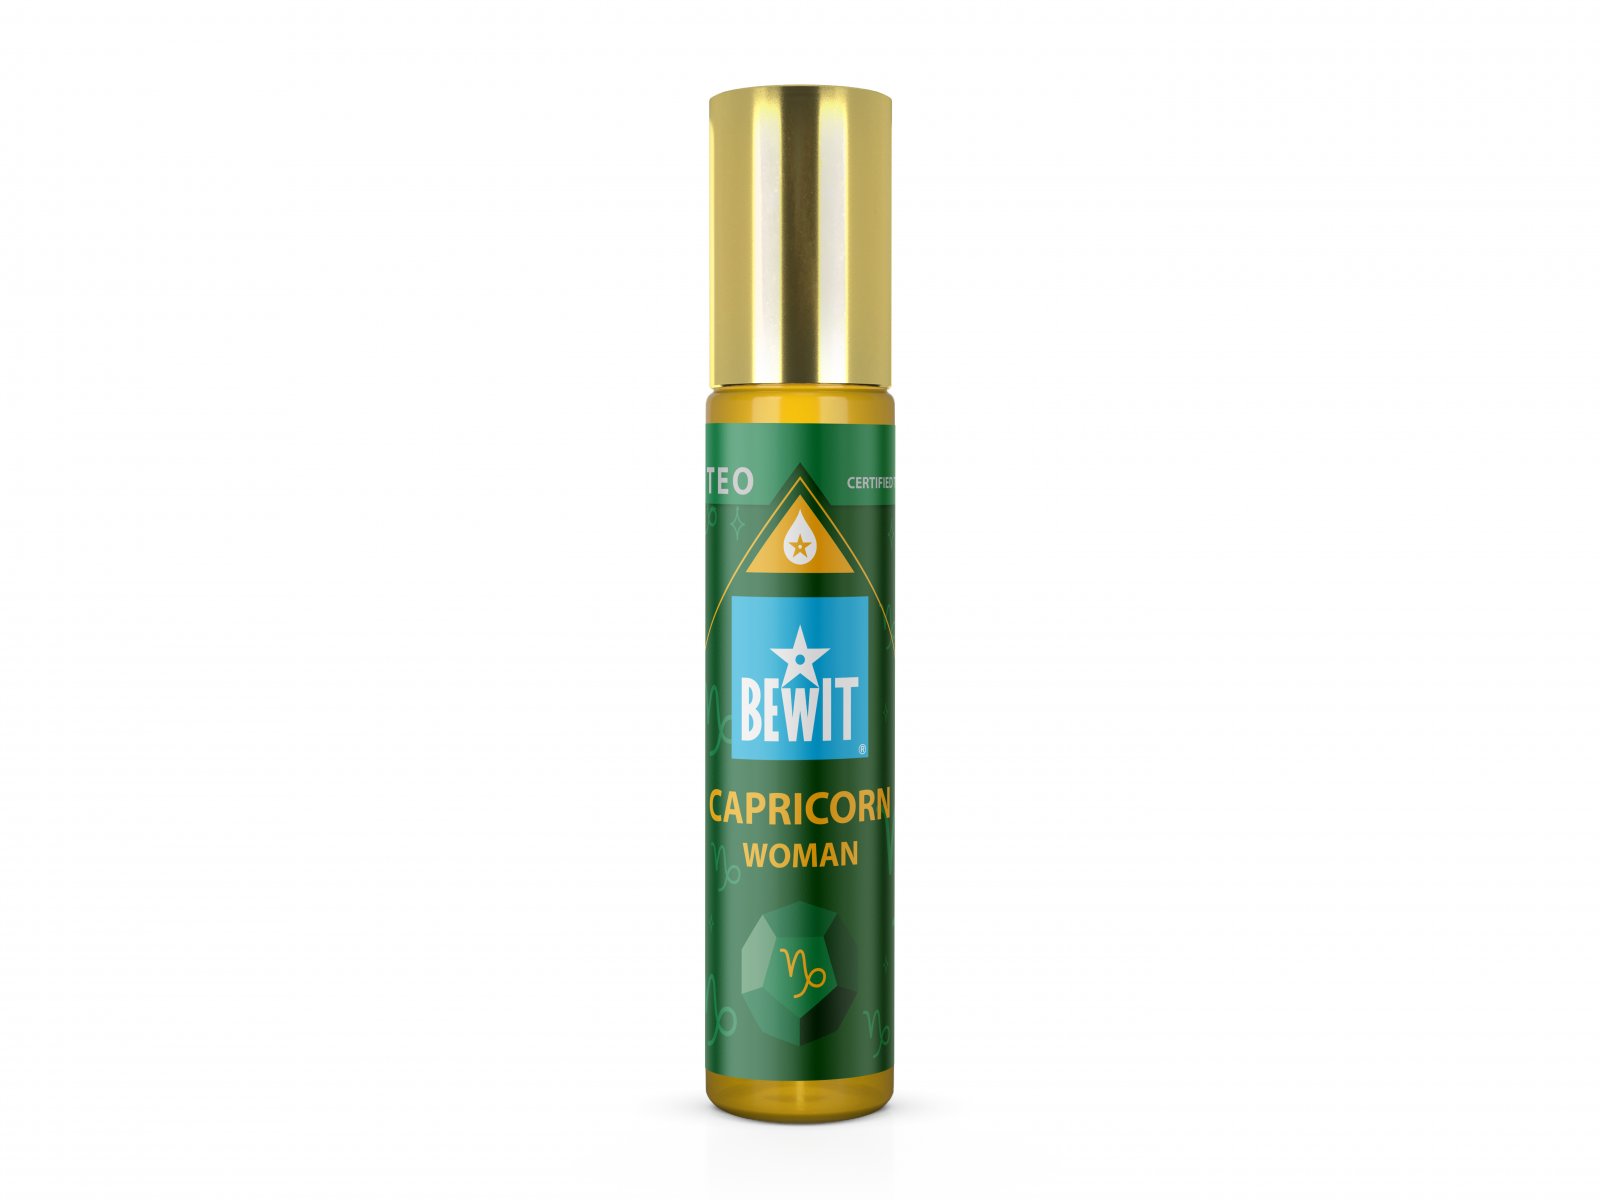 BEWIT WOMAN CAPRICORN (SEA GOAT) - Women's roll-on oil perfume - 1